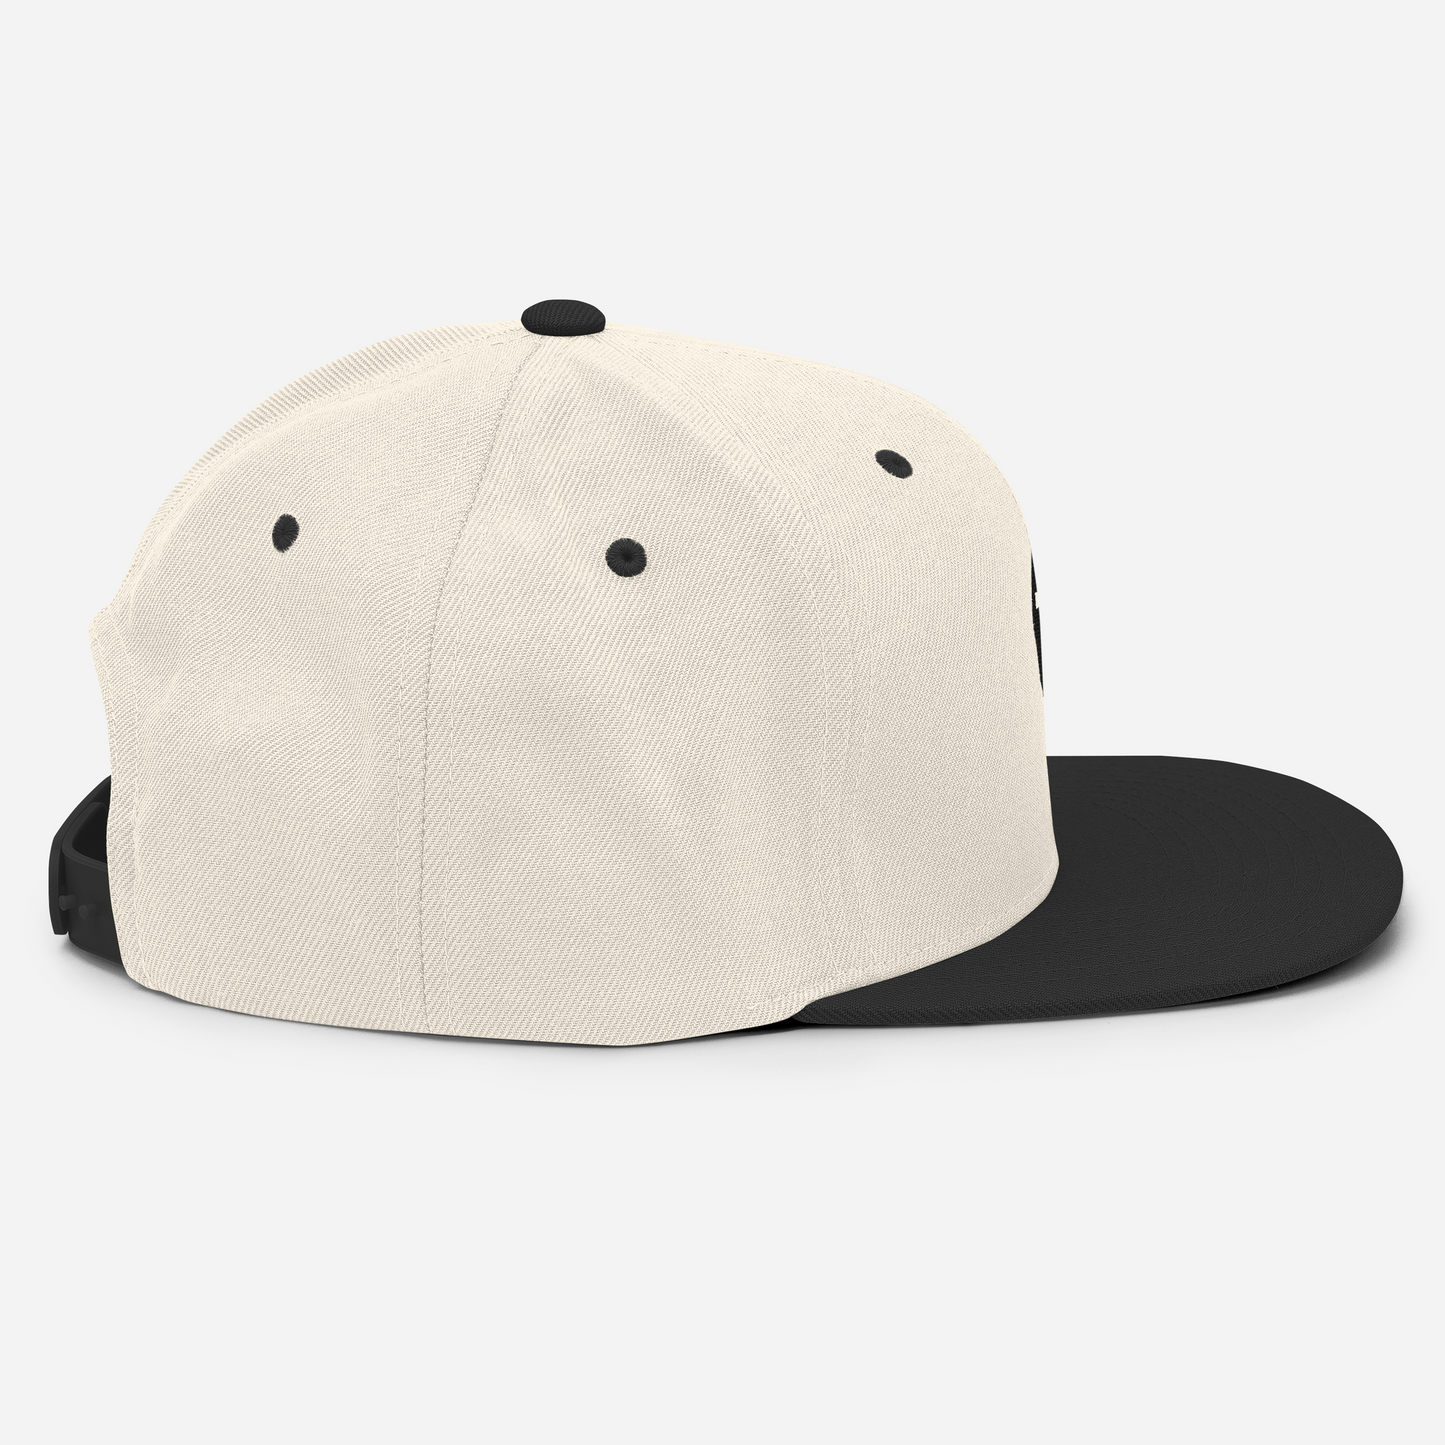 GDG Snapback Hat